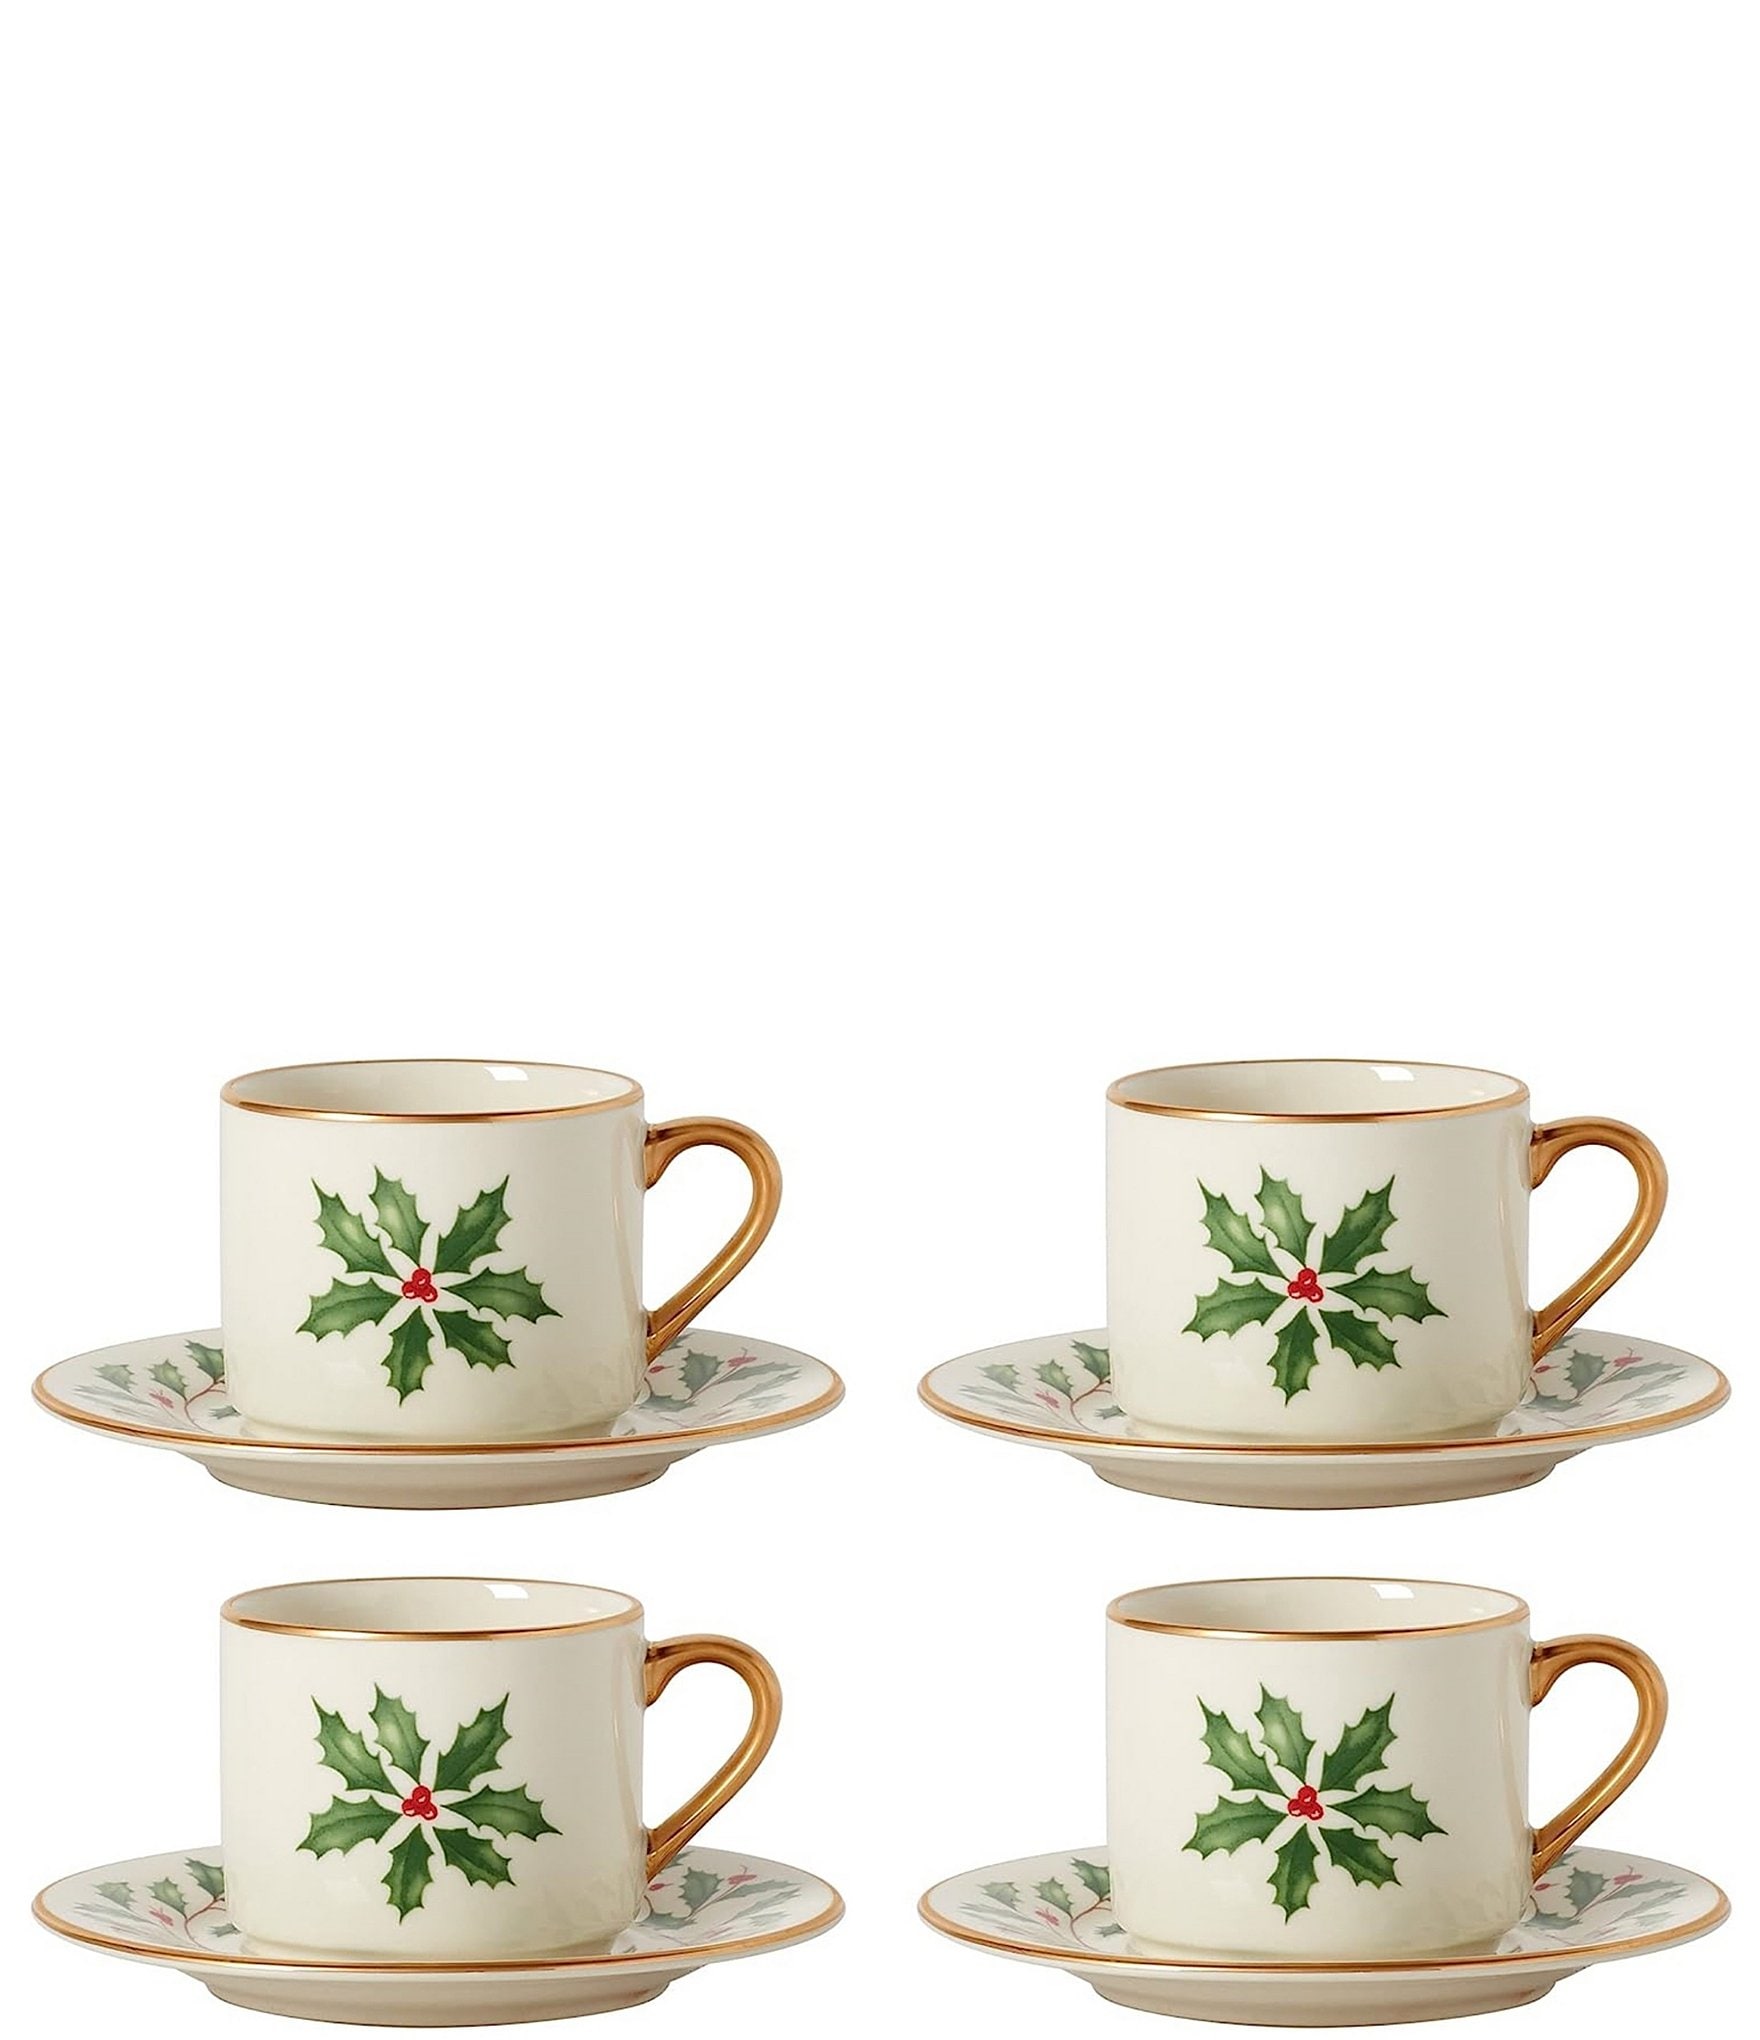 3oz Espresso Cups (Set of 4) - Mineral, Danica Heirloom